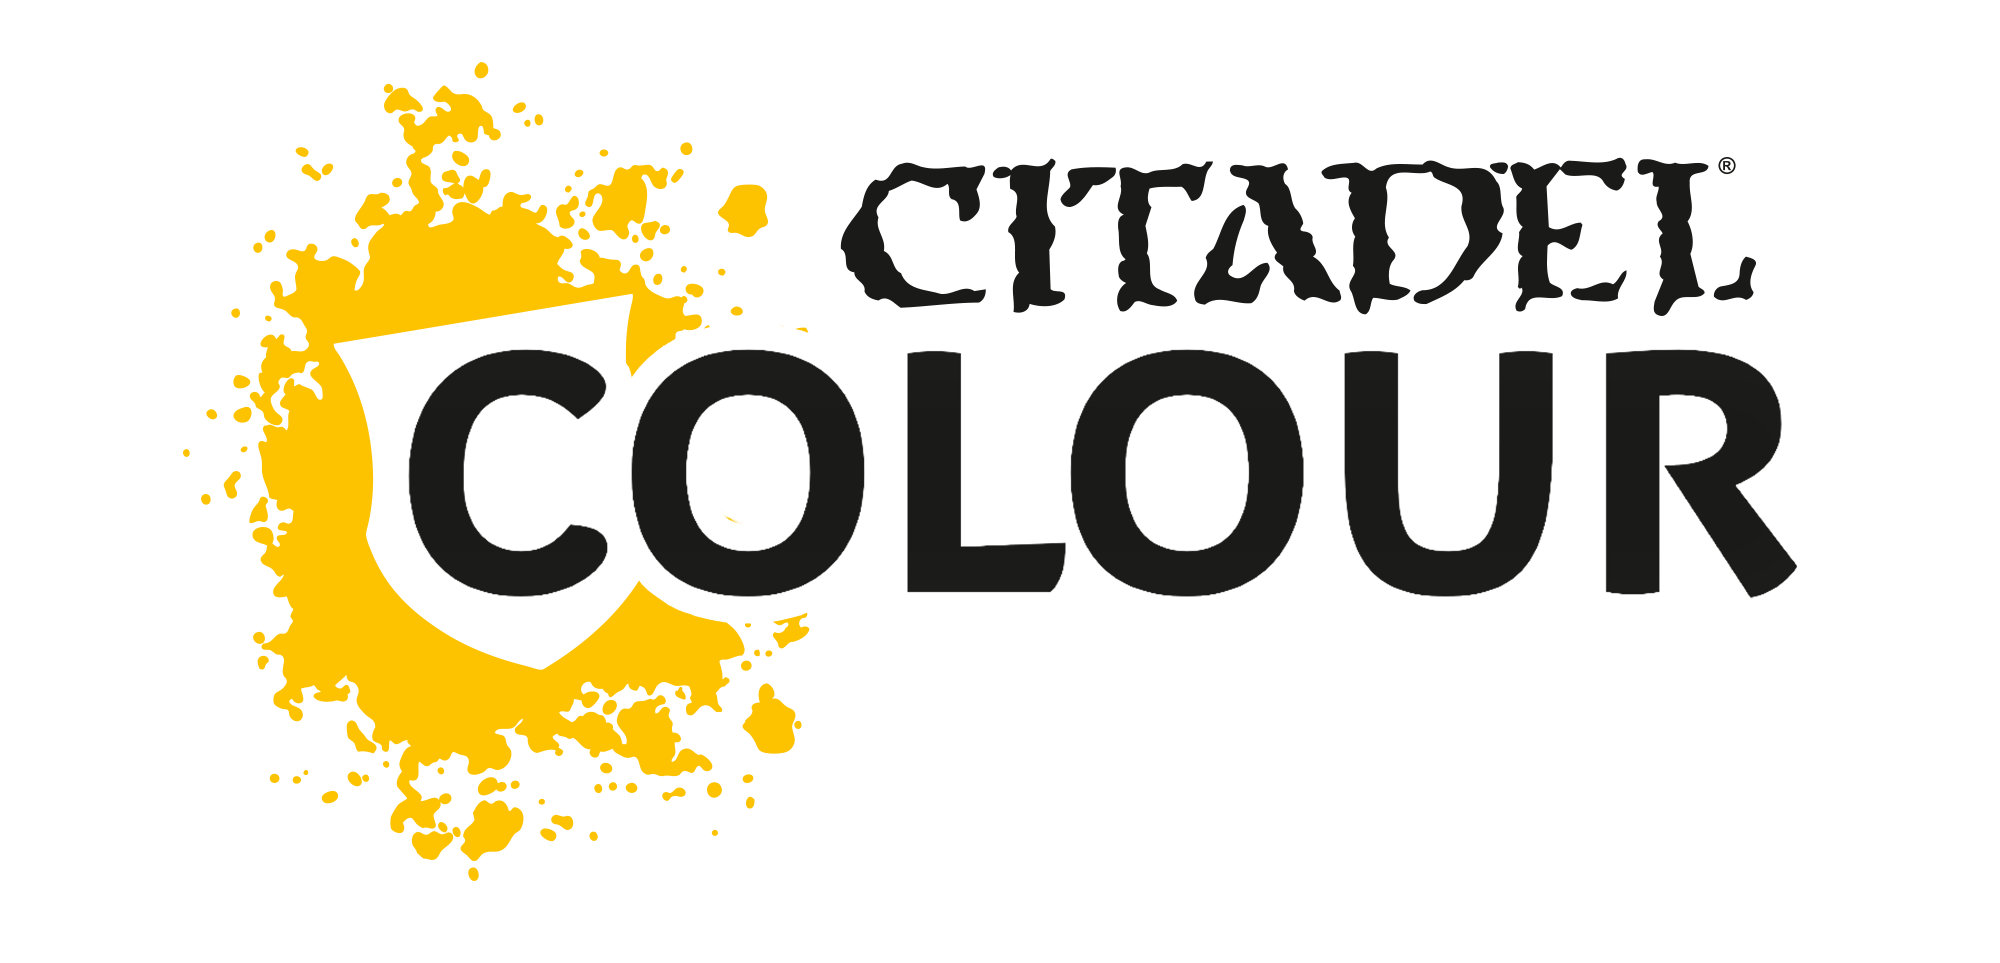 Paint: Citadel - Shade Citadel Colour: Shade Paint Set - Tower of